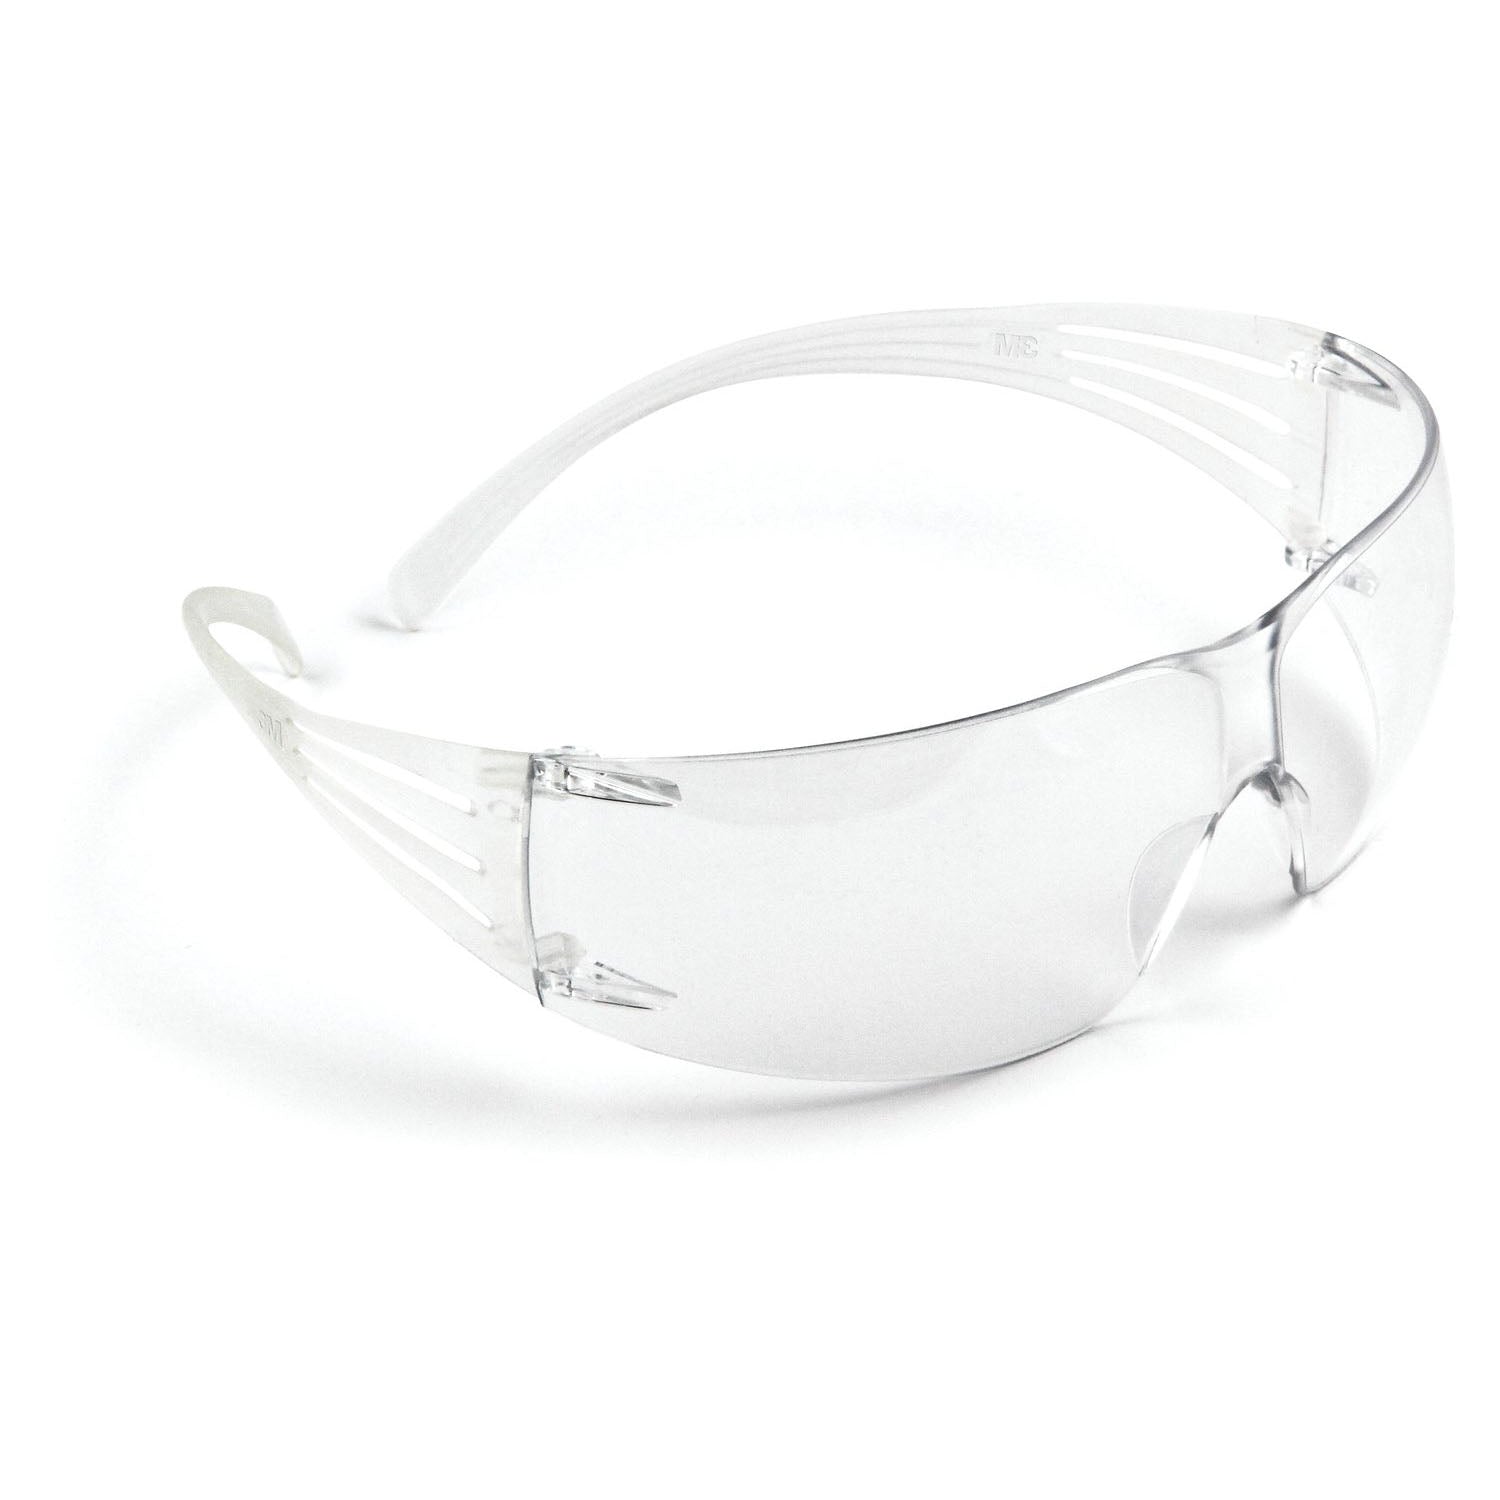 3M SecureFit Anti-Fog Safety Glasses - Clear